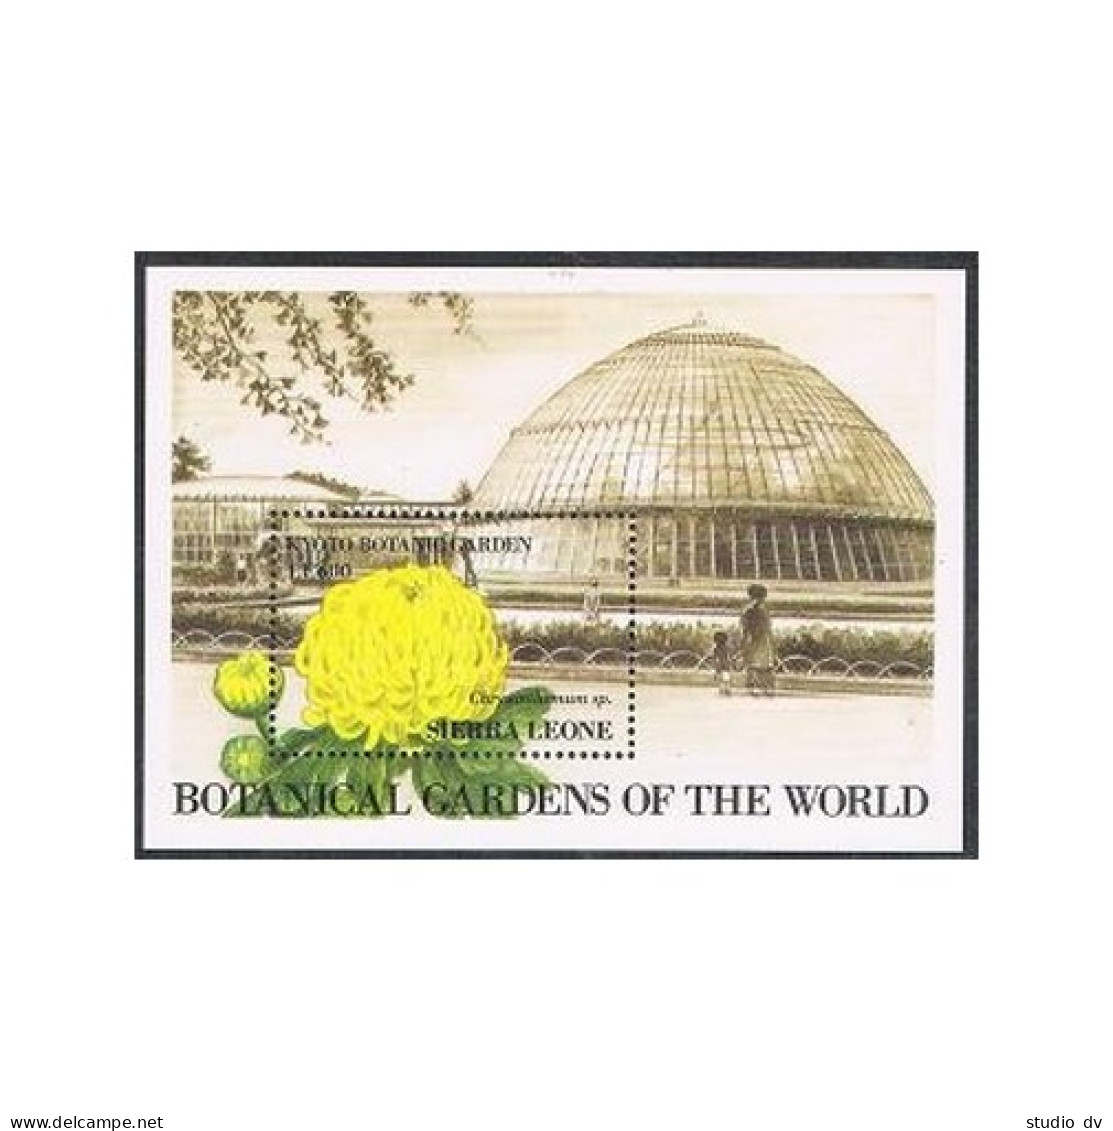 Sierra Leone 1428, MNH. Michel 1727. Kyoto Botanic Gardens, 1991. Chrysanthemum. - Sierra Leone (1961-...)